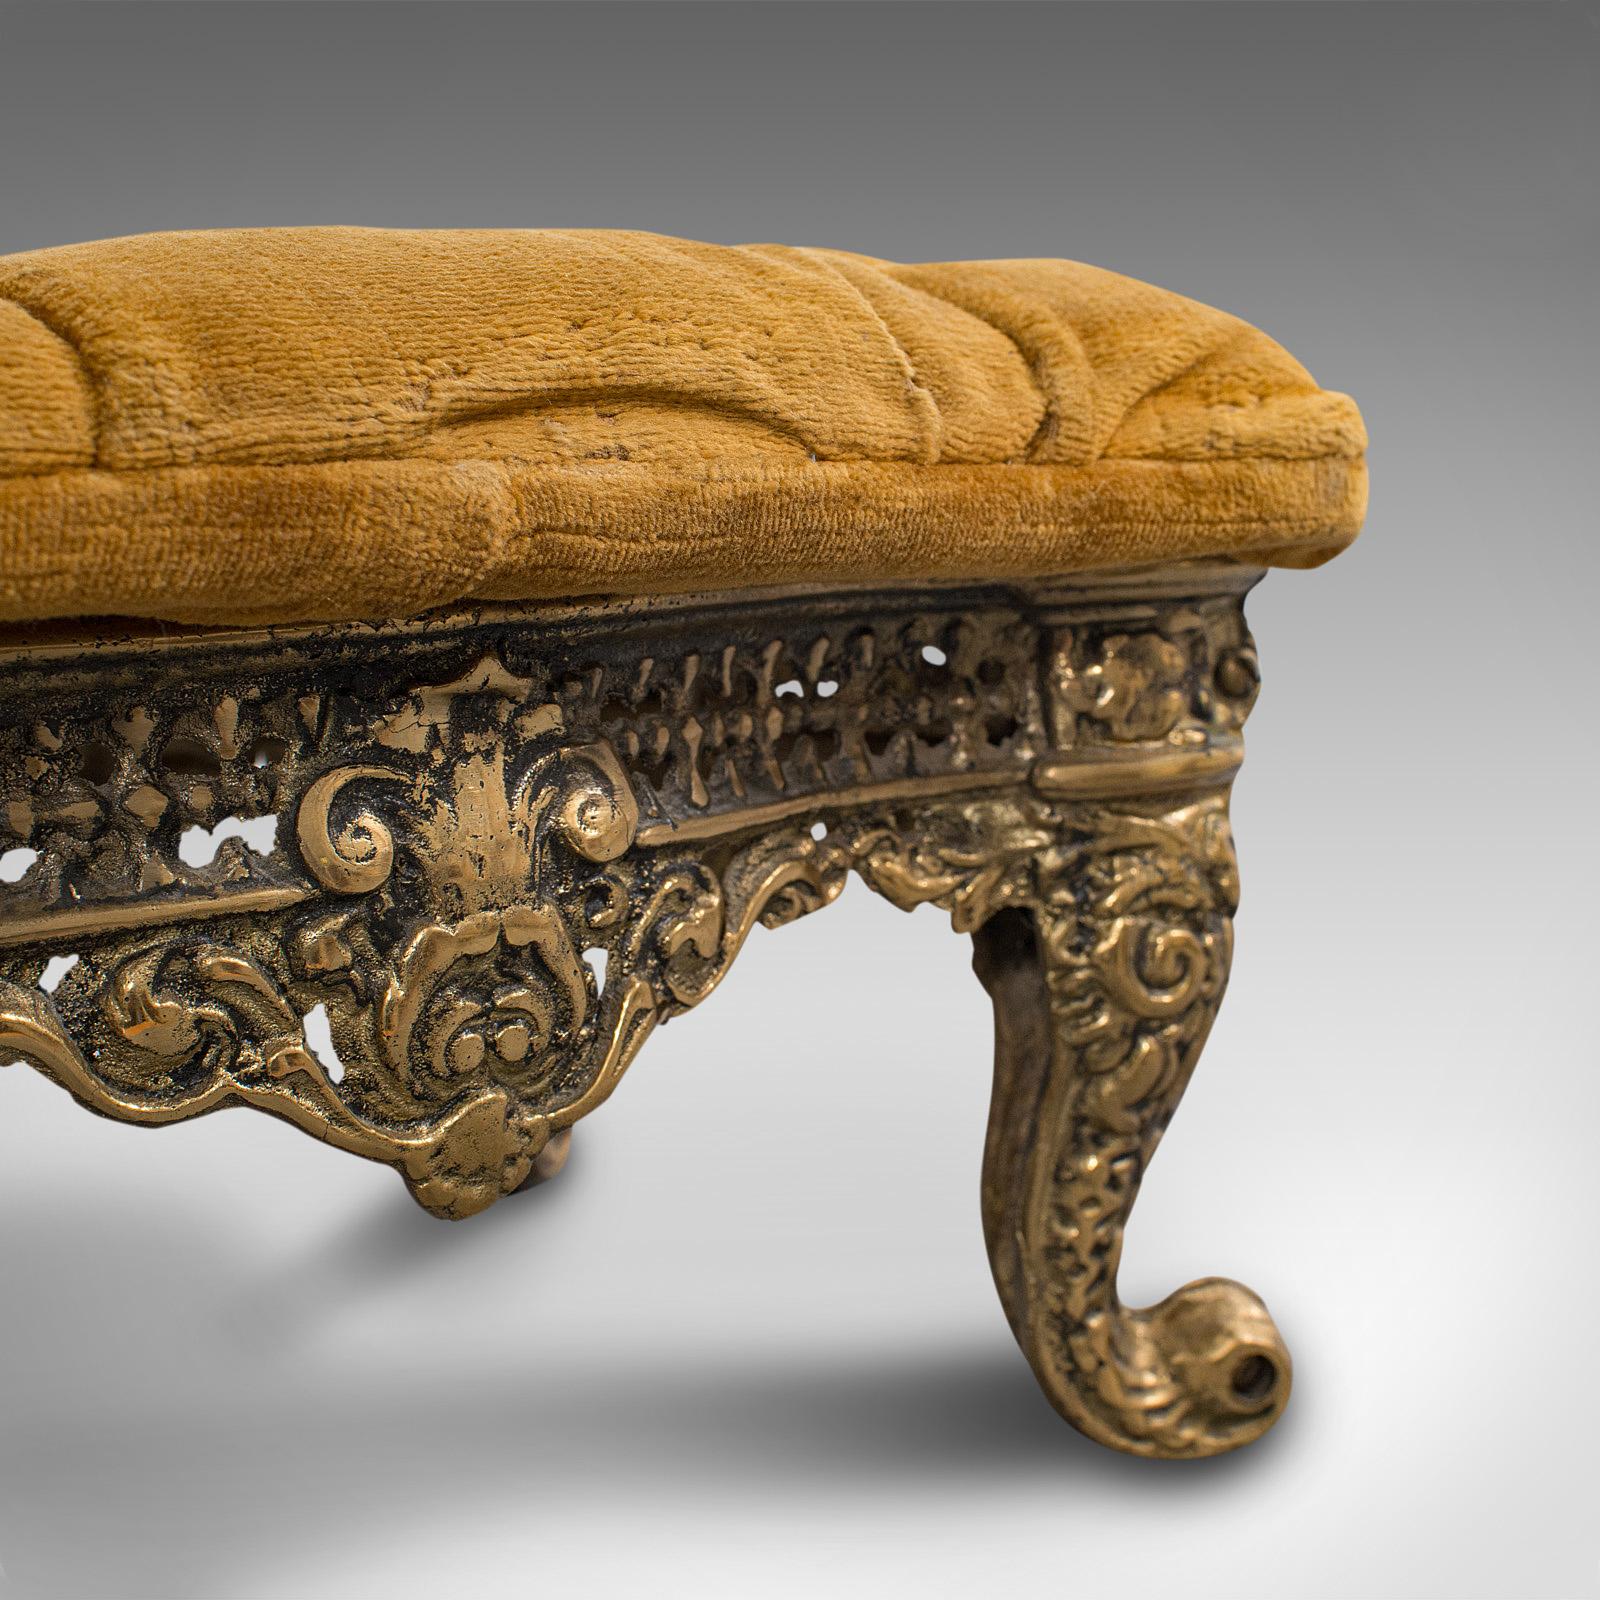 Antique Decorative Footstool, Italian, Gilt, Stool, Baroque Revival, circa 1900 4